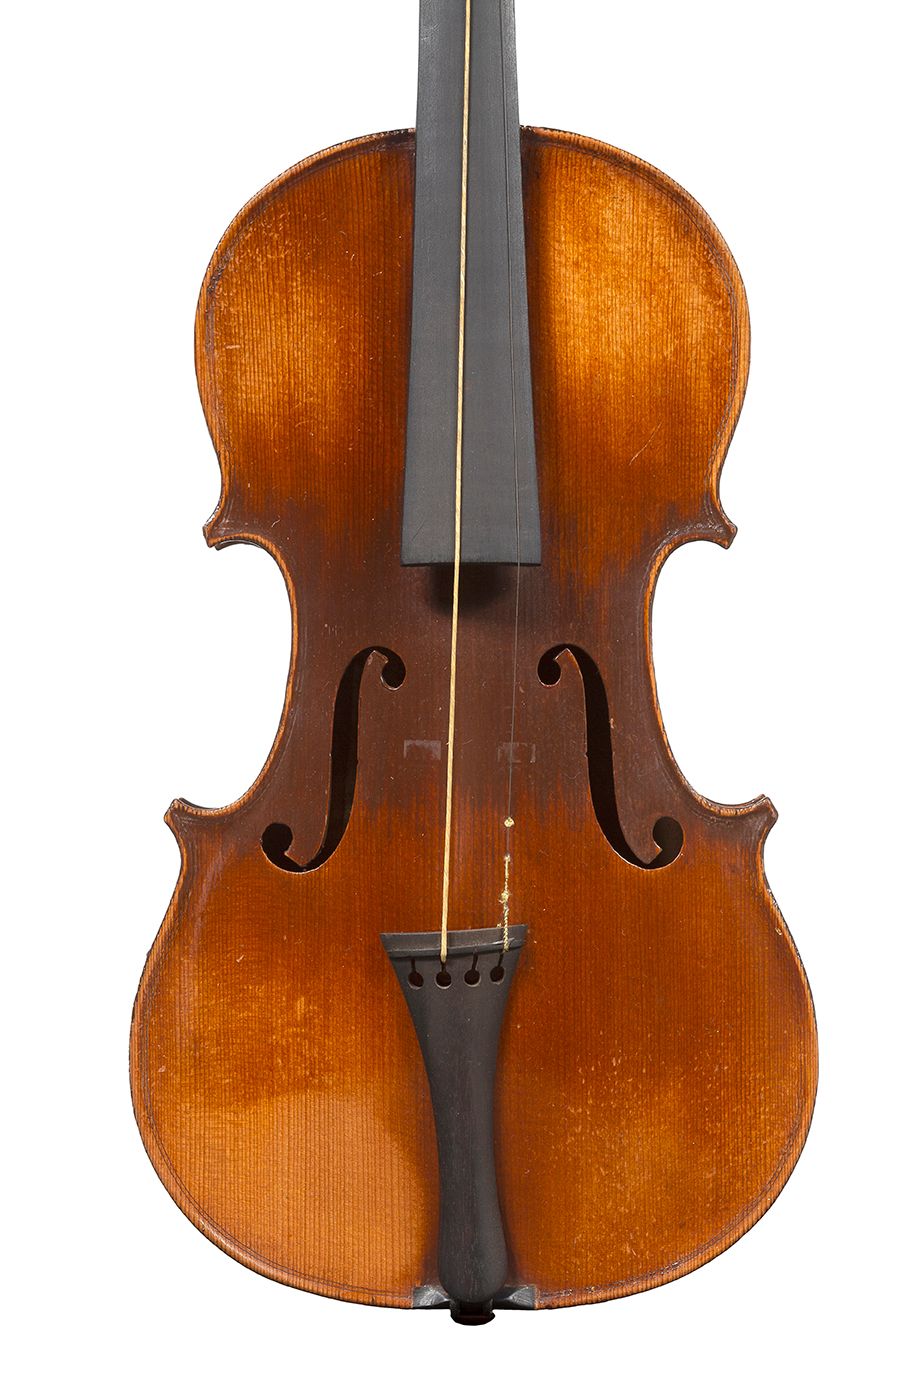 Null 3/4尺寸的学生小提琴
工业化生产
无螺丝，有伪装的Stradivarius标签
状况良好 
背面340毫米